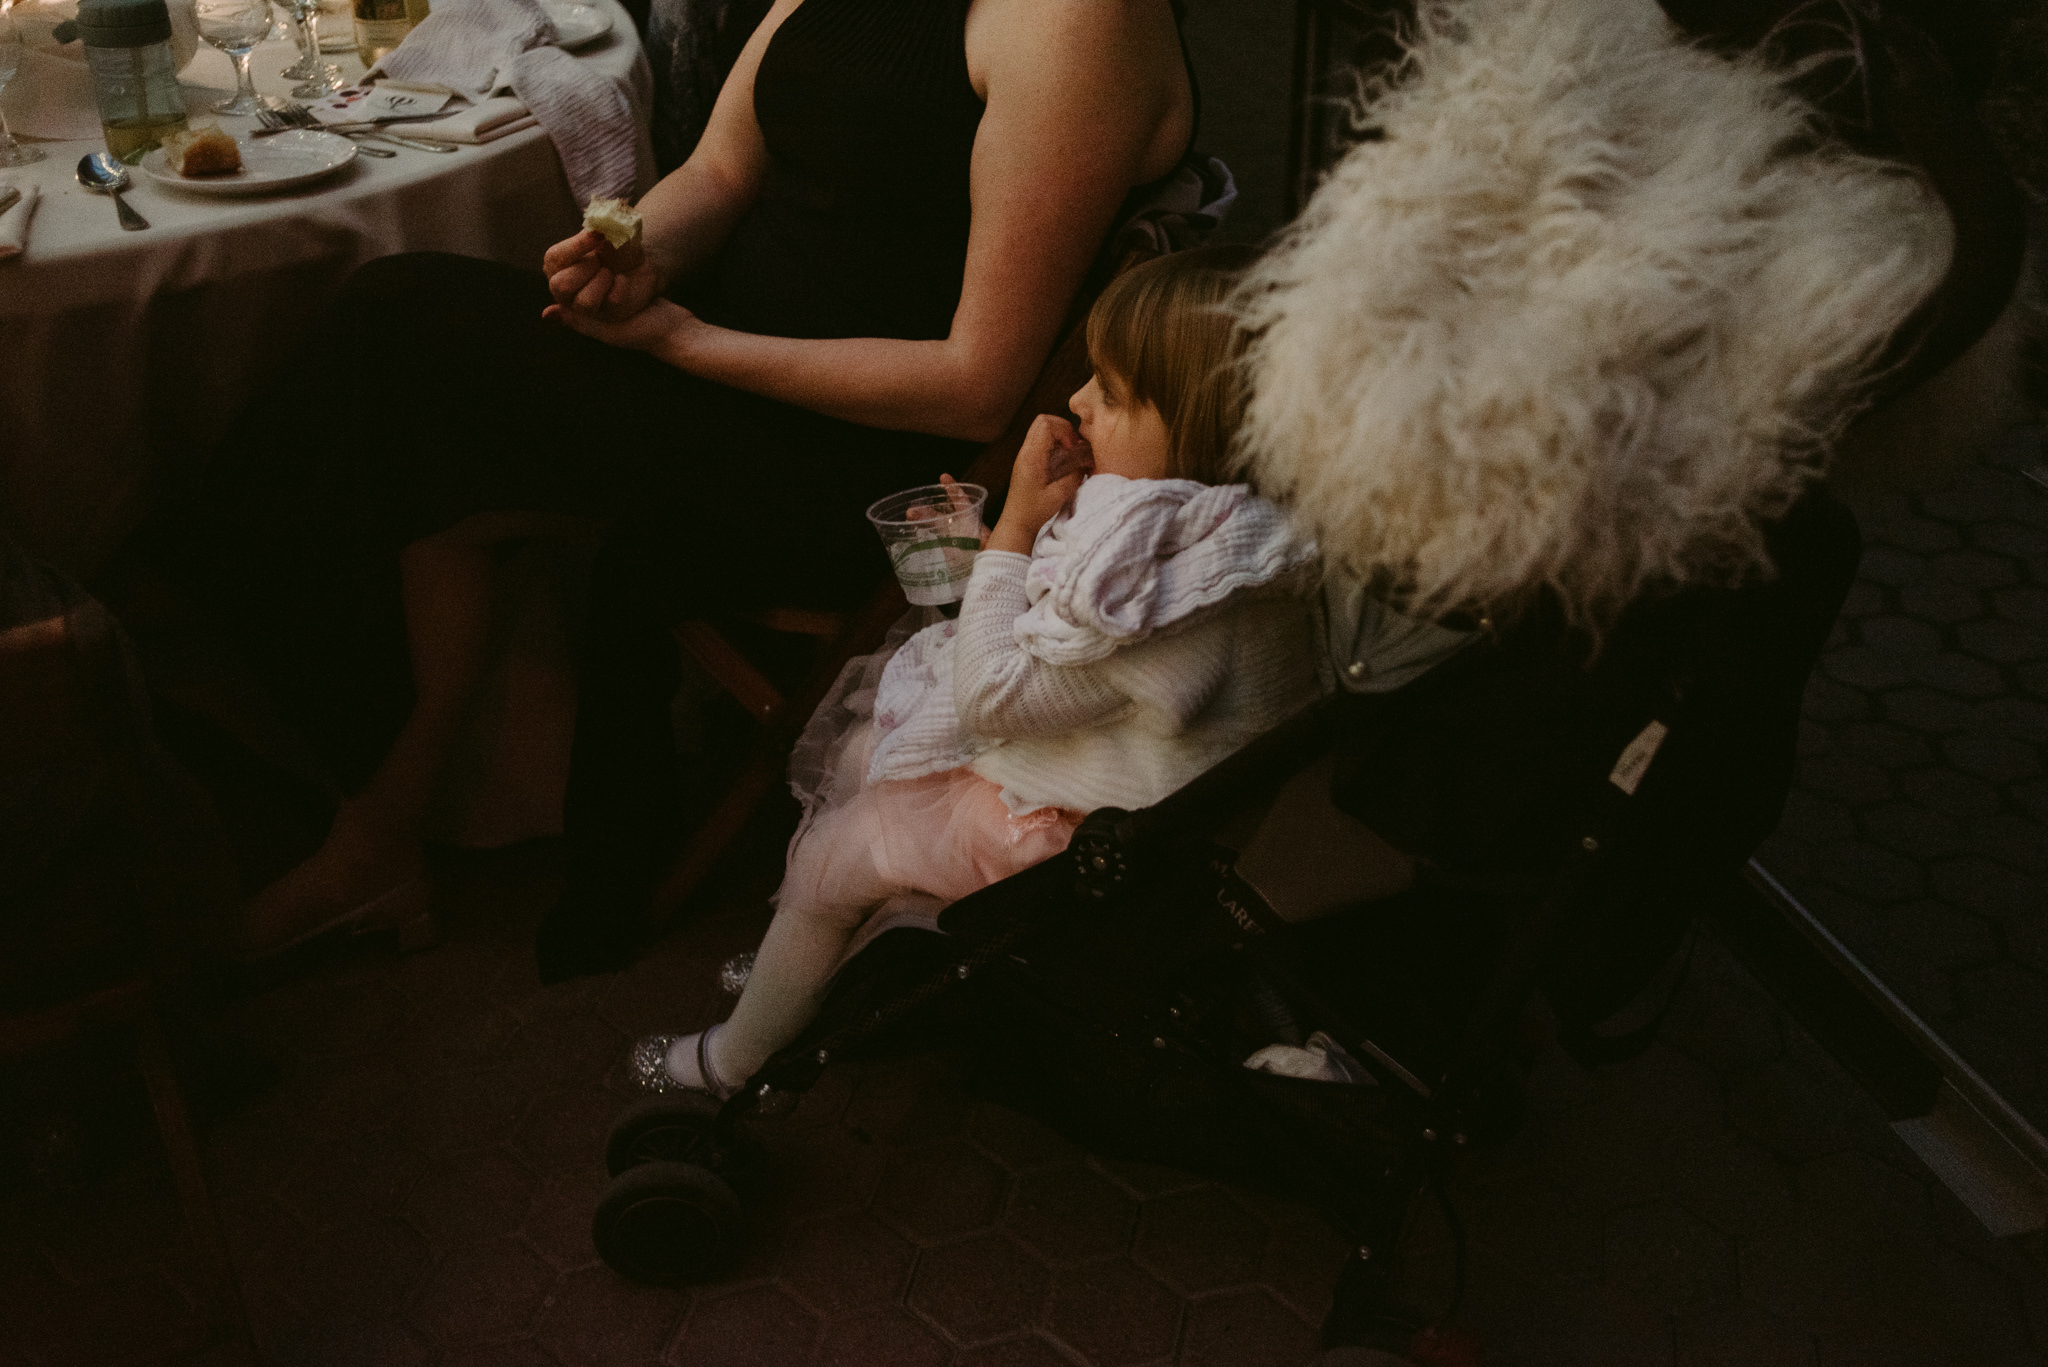 Little girl in stroller at wedding reception